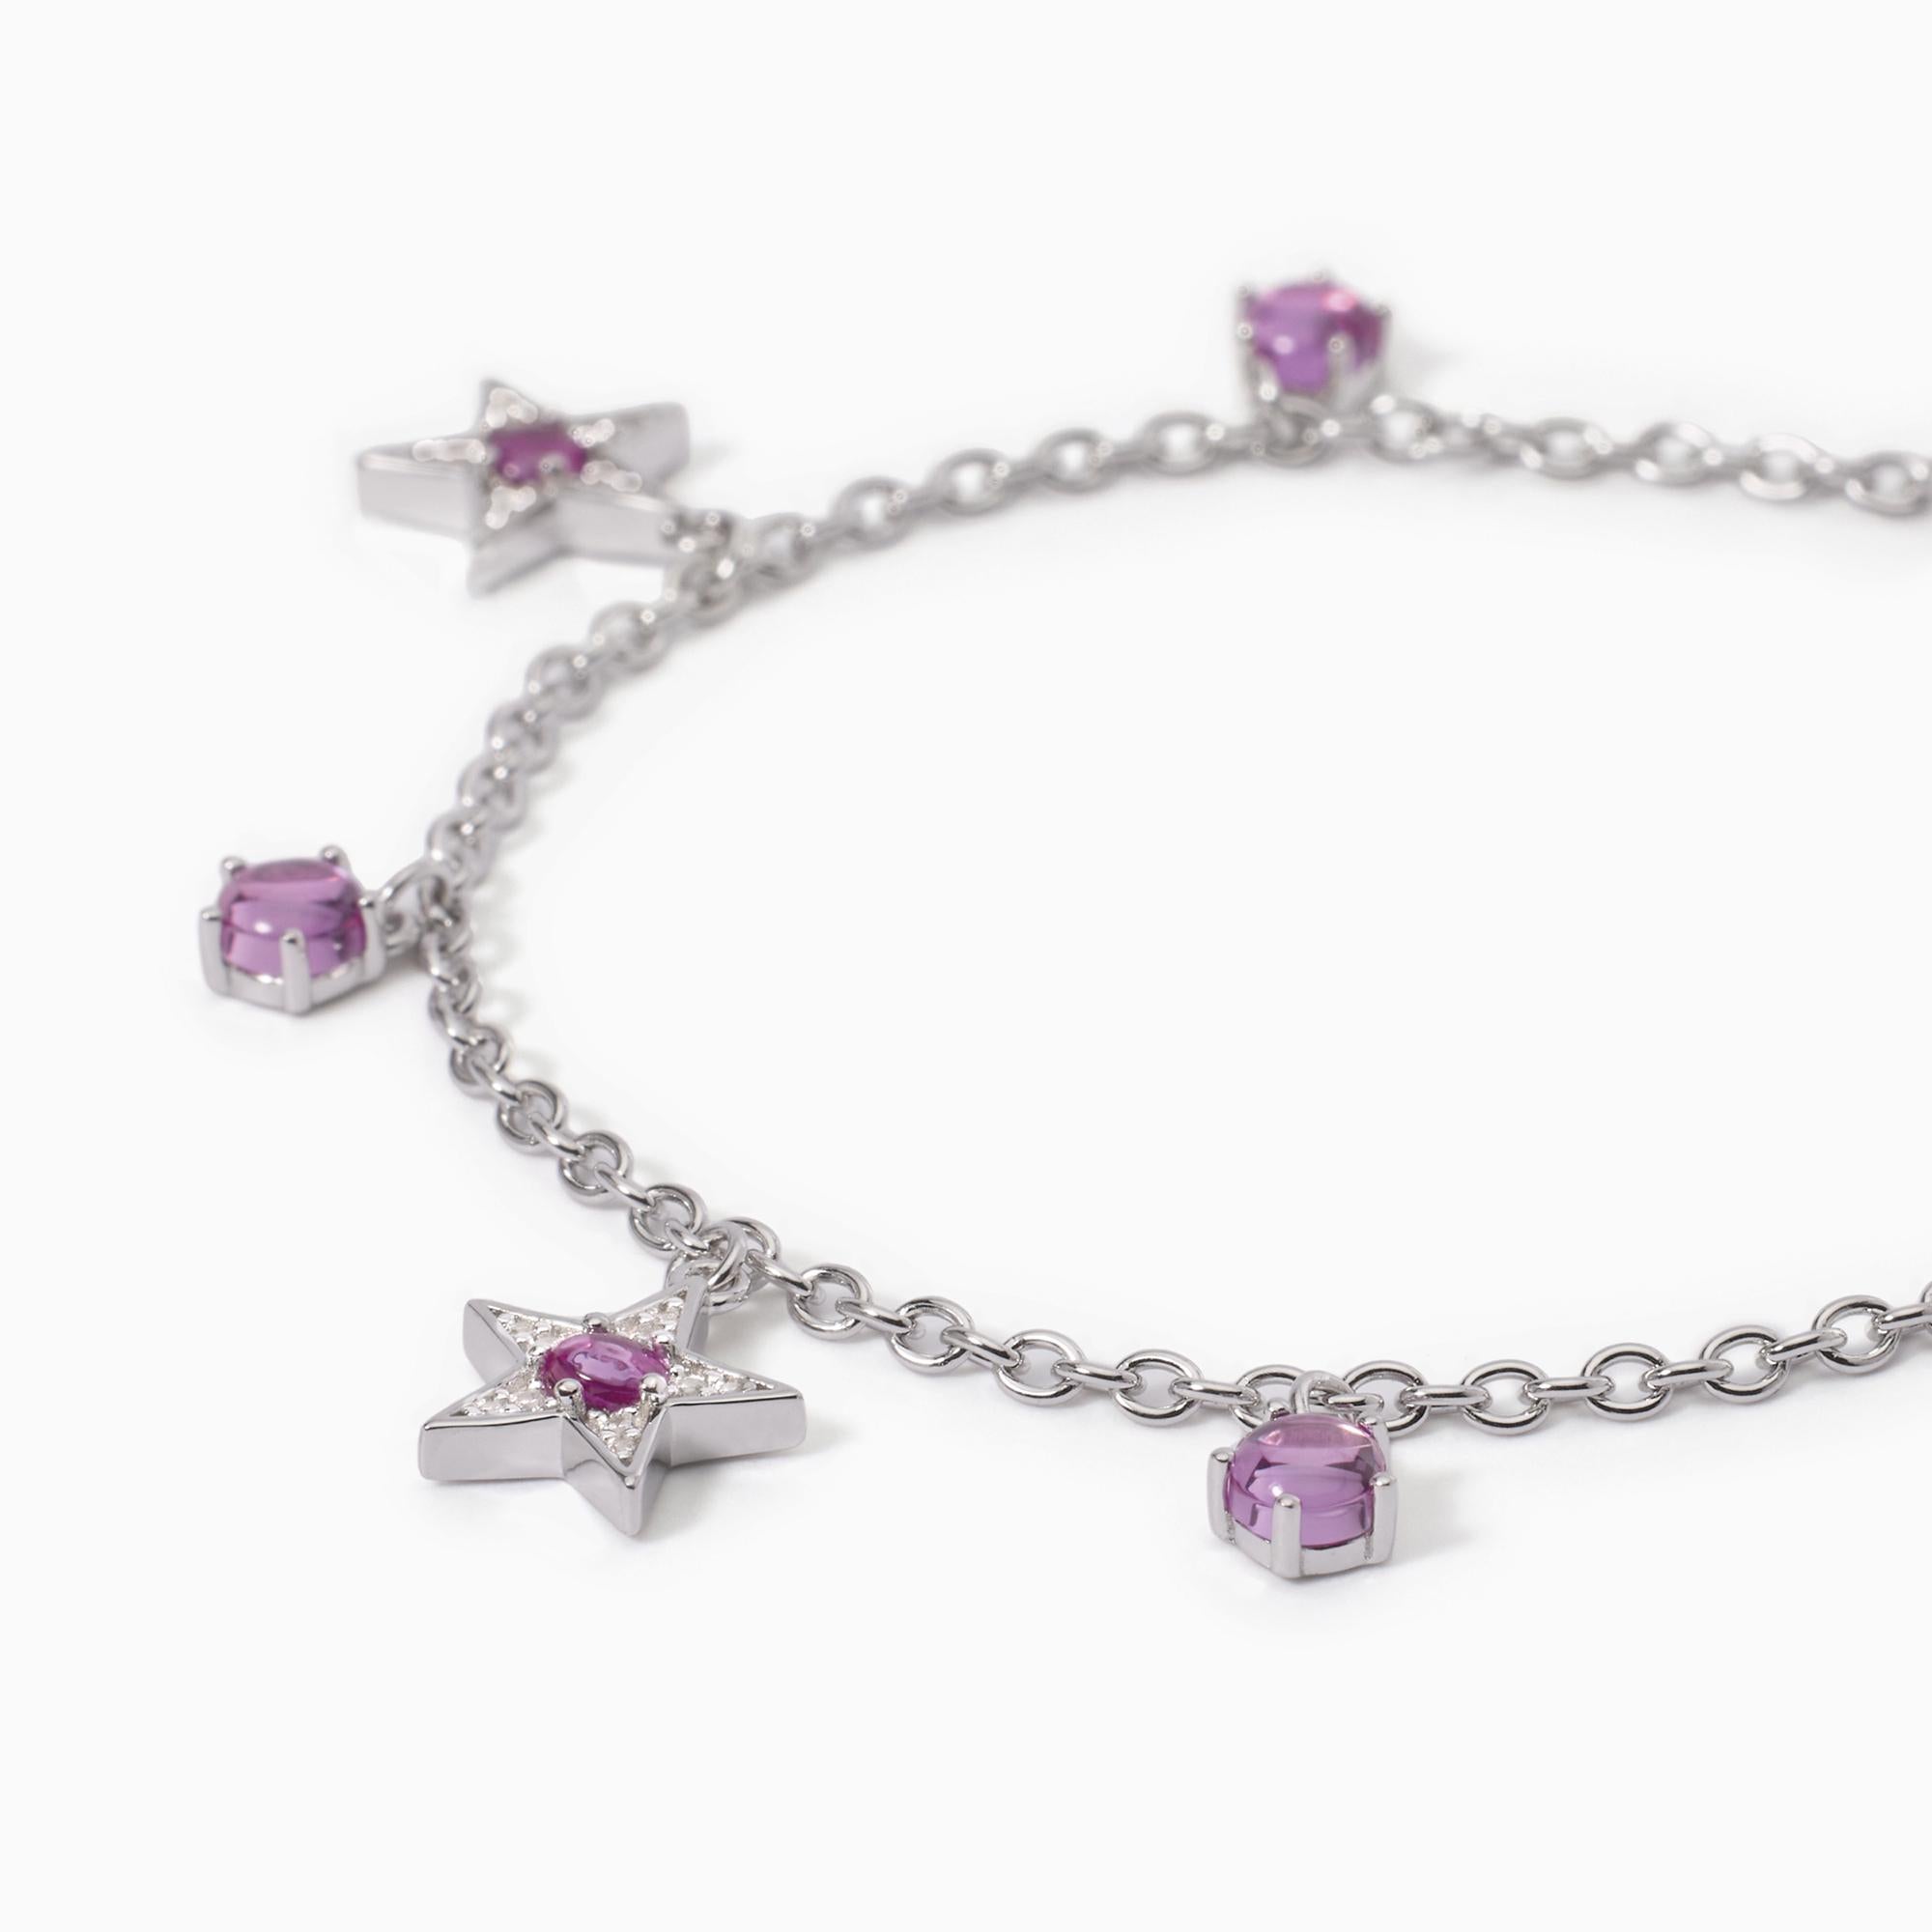 Mabina Woman - STARLET multicharm star bracelet - 533649